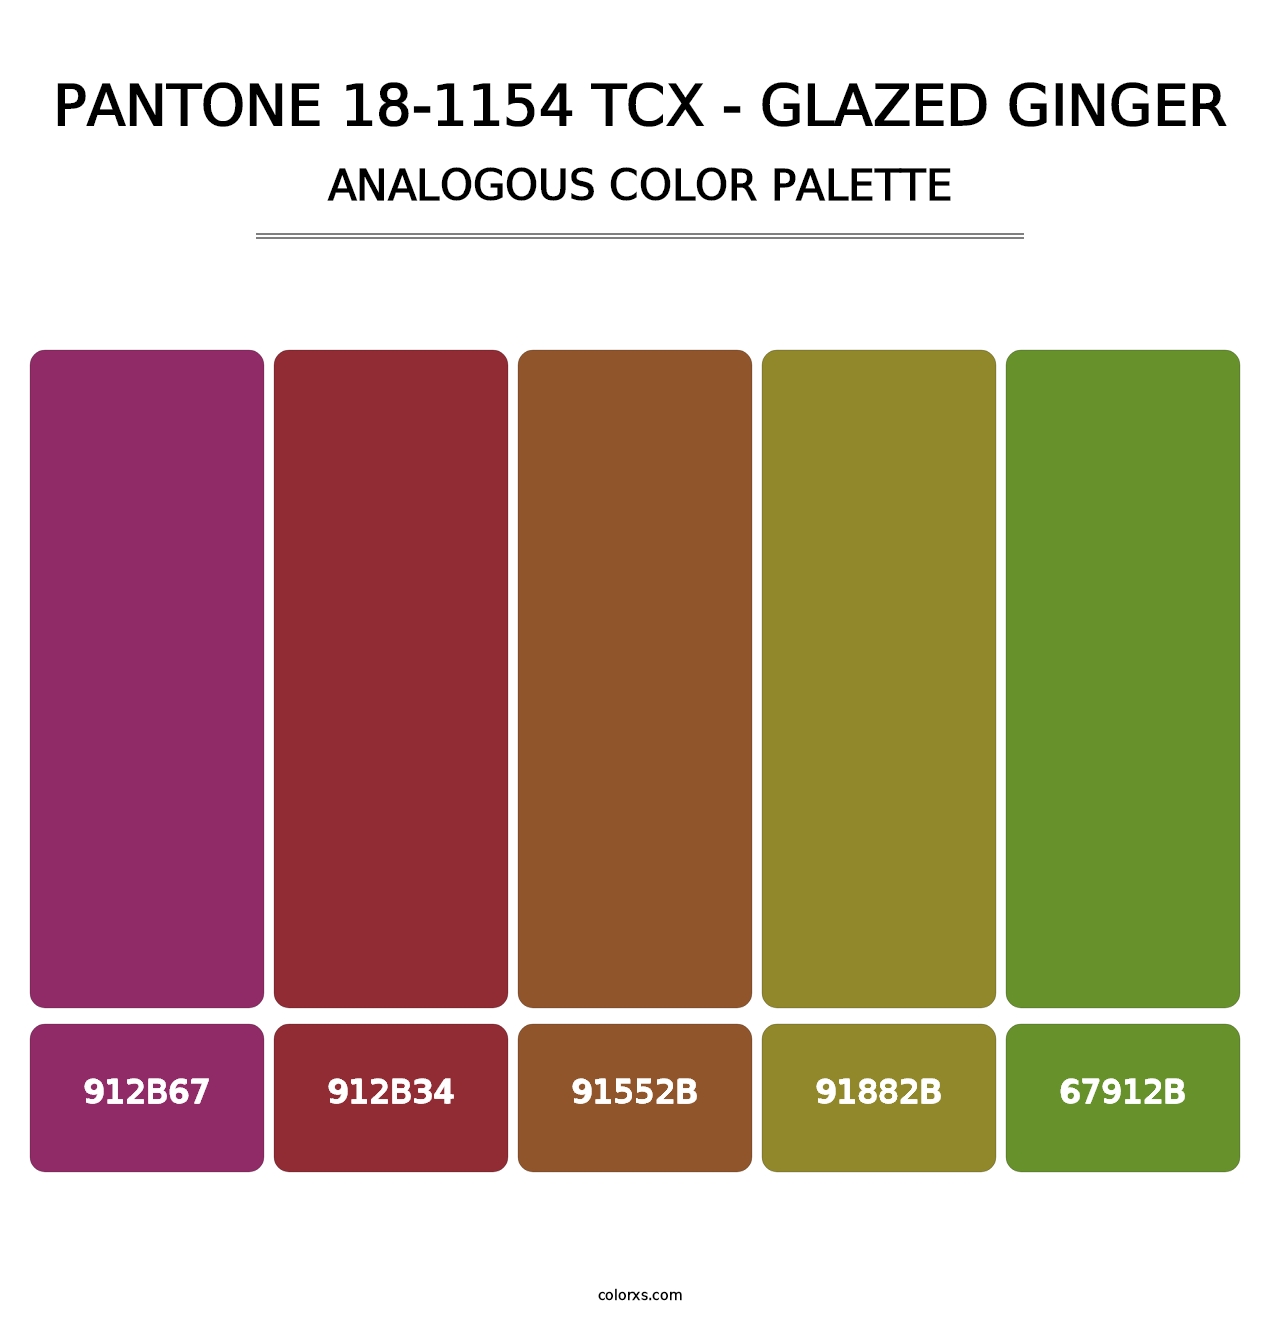 PANTONE 18-1154 TCX - Glazed Ginger - Analogous Color Palette